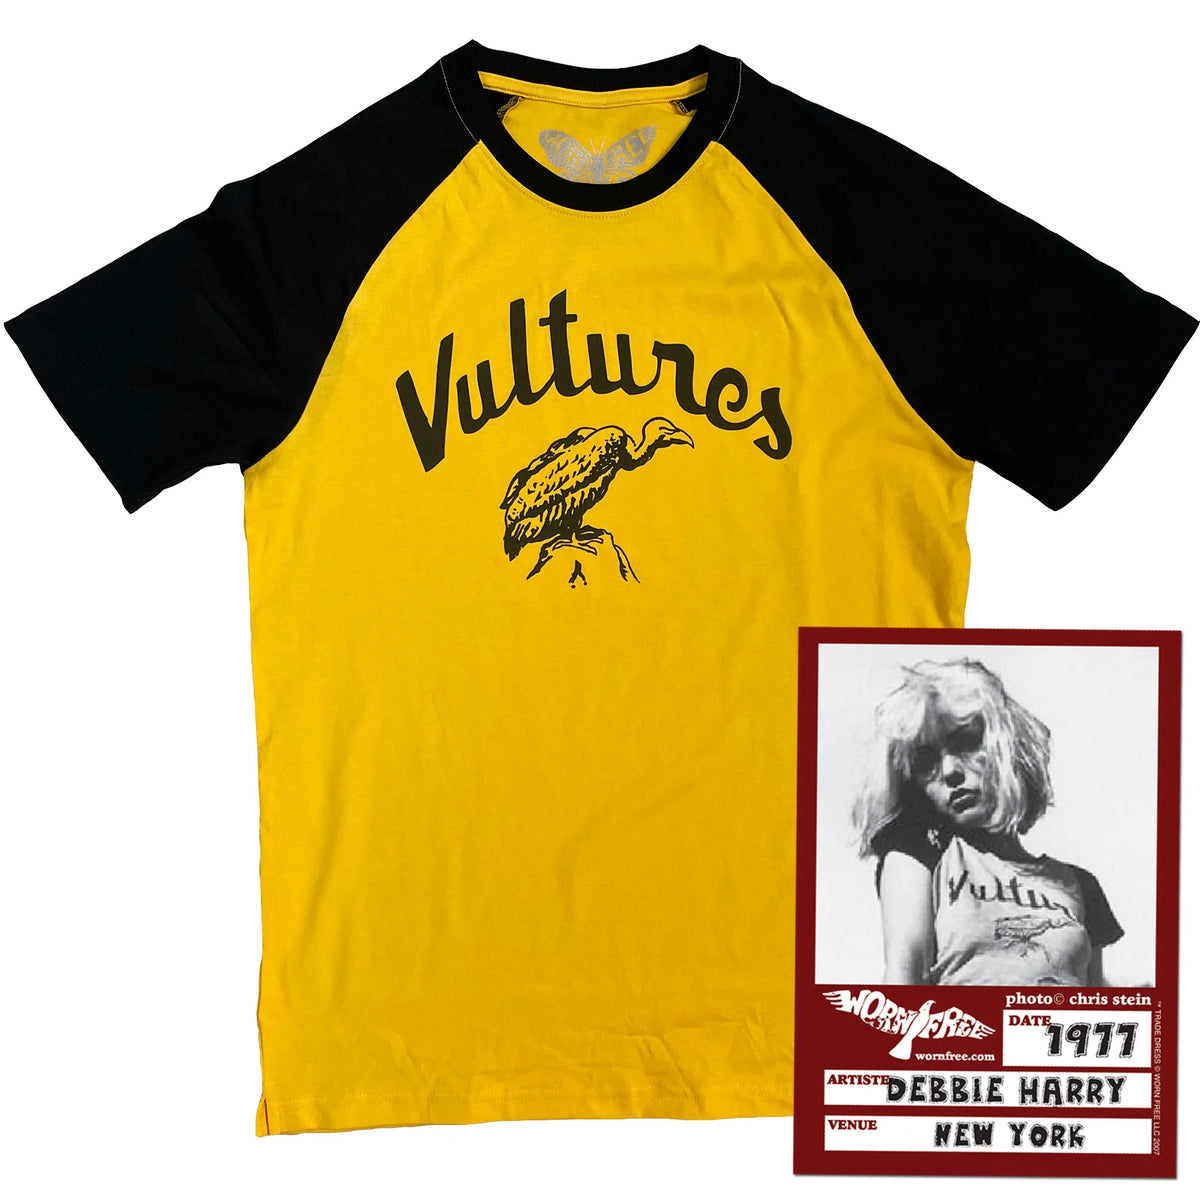 Worn Free Vultures Baseball T Shirt - Black/Yellow